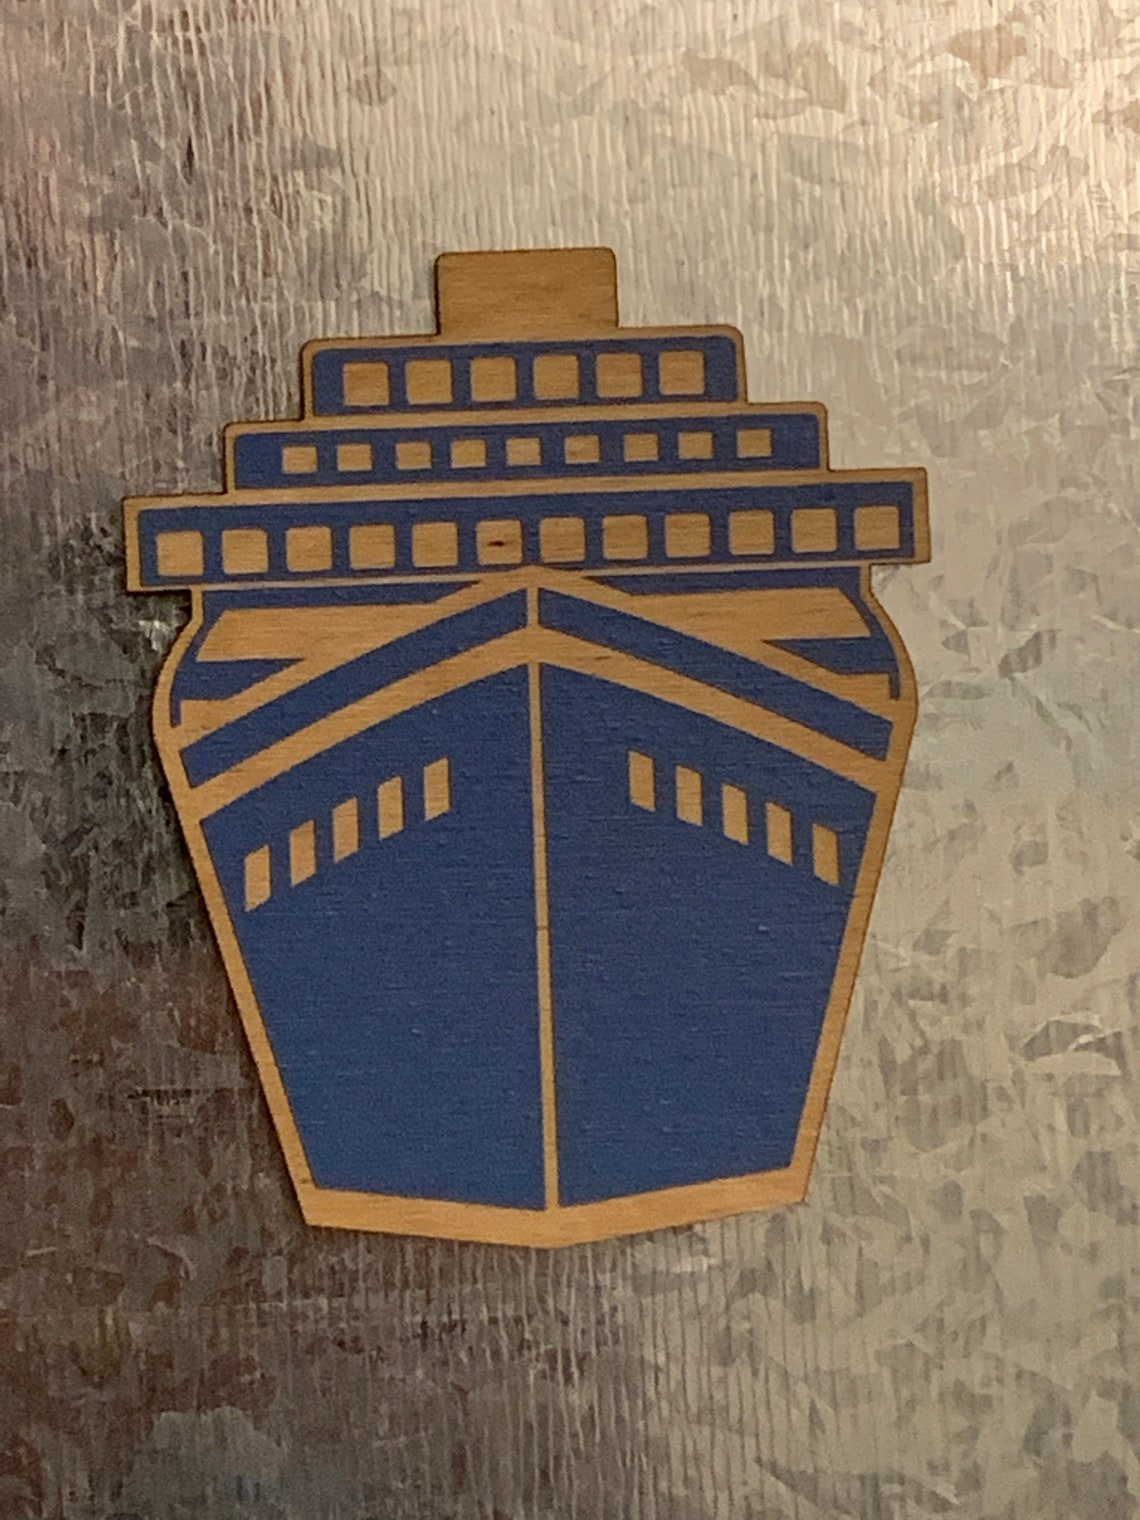 cruise ship magnet decoration